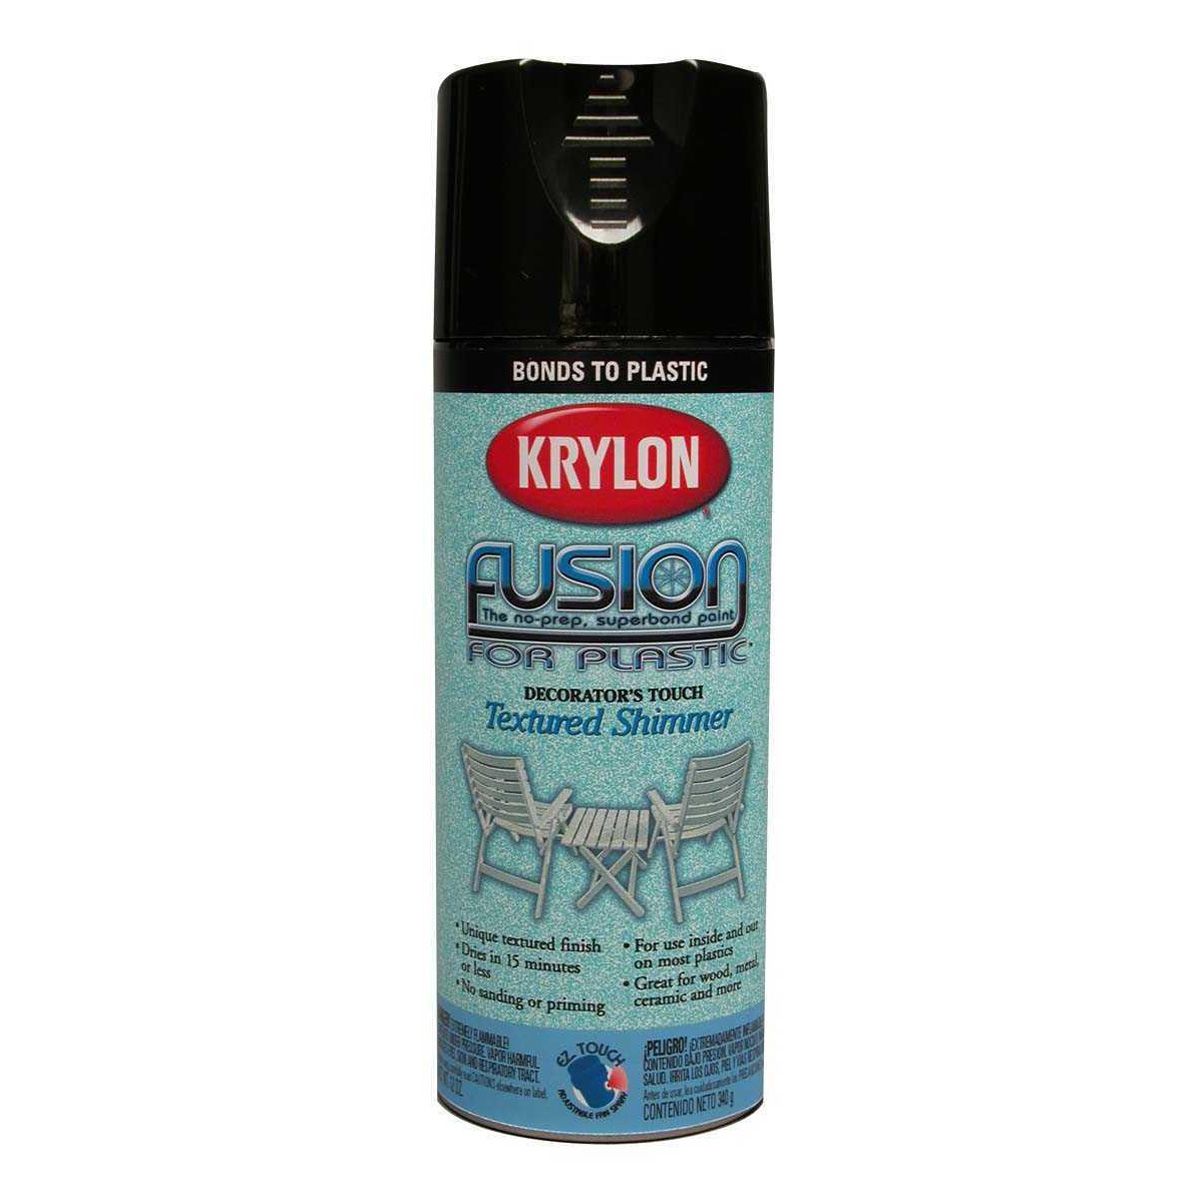 Krylon Fusion for Plastic&reg; Textured Shimmer - Black Textured